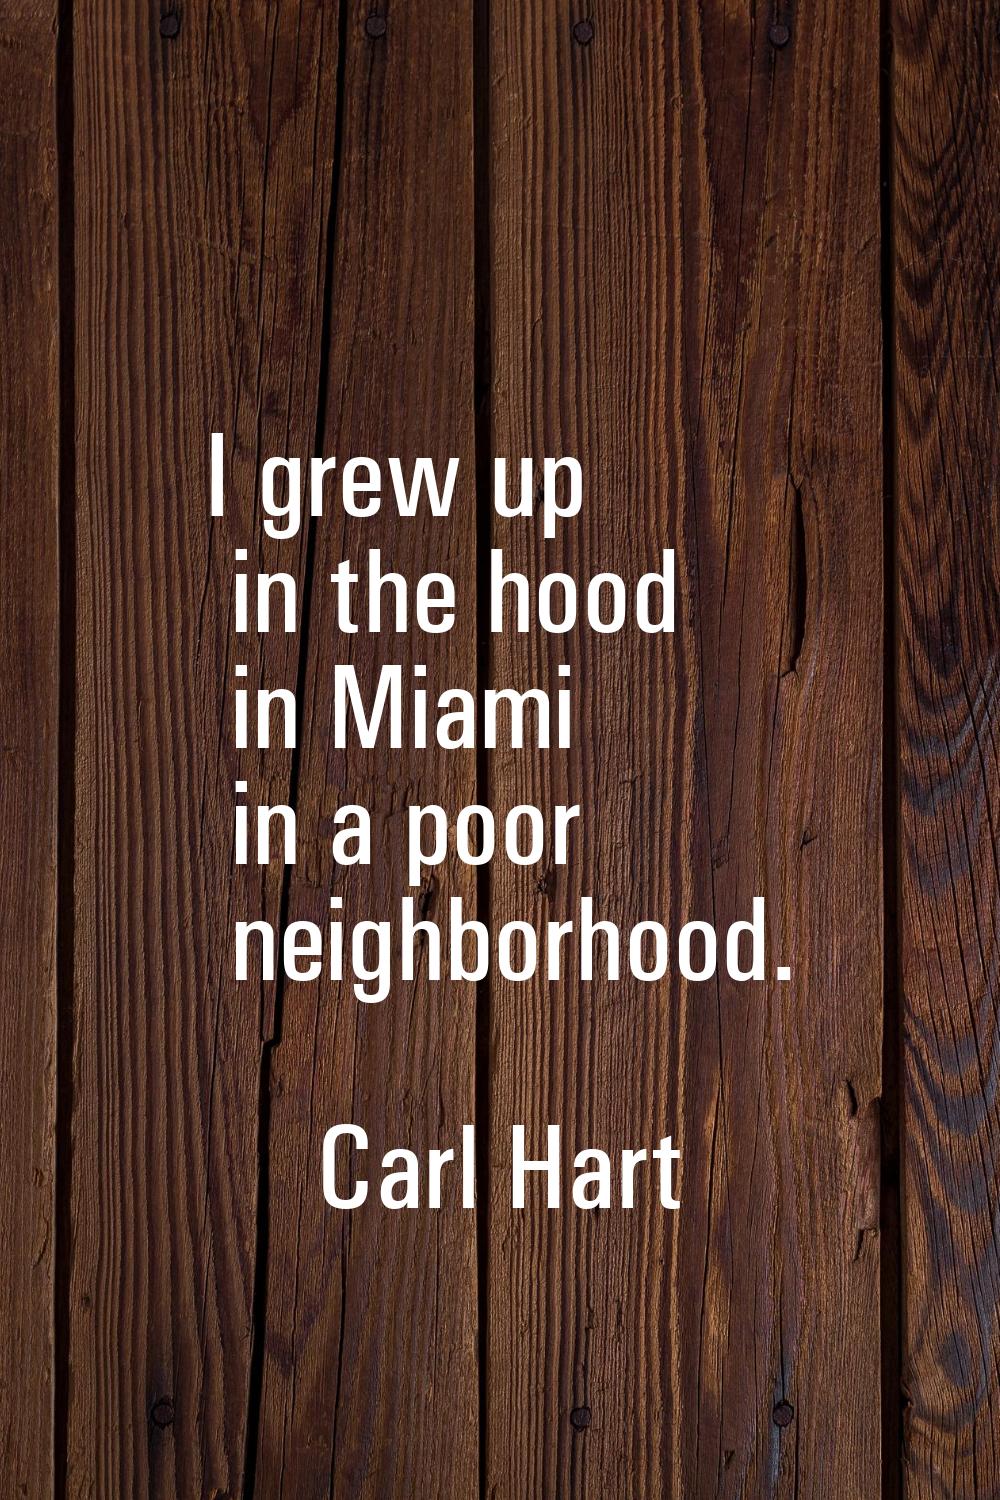 I grew up in the hood in Miami in a poor neighborhood.